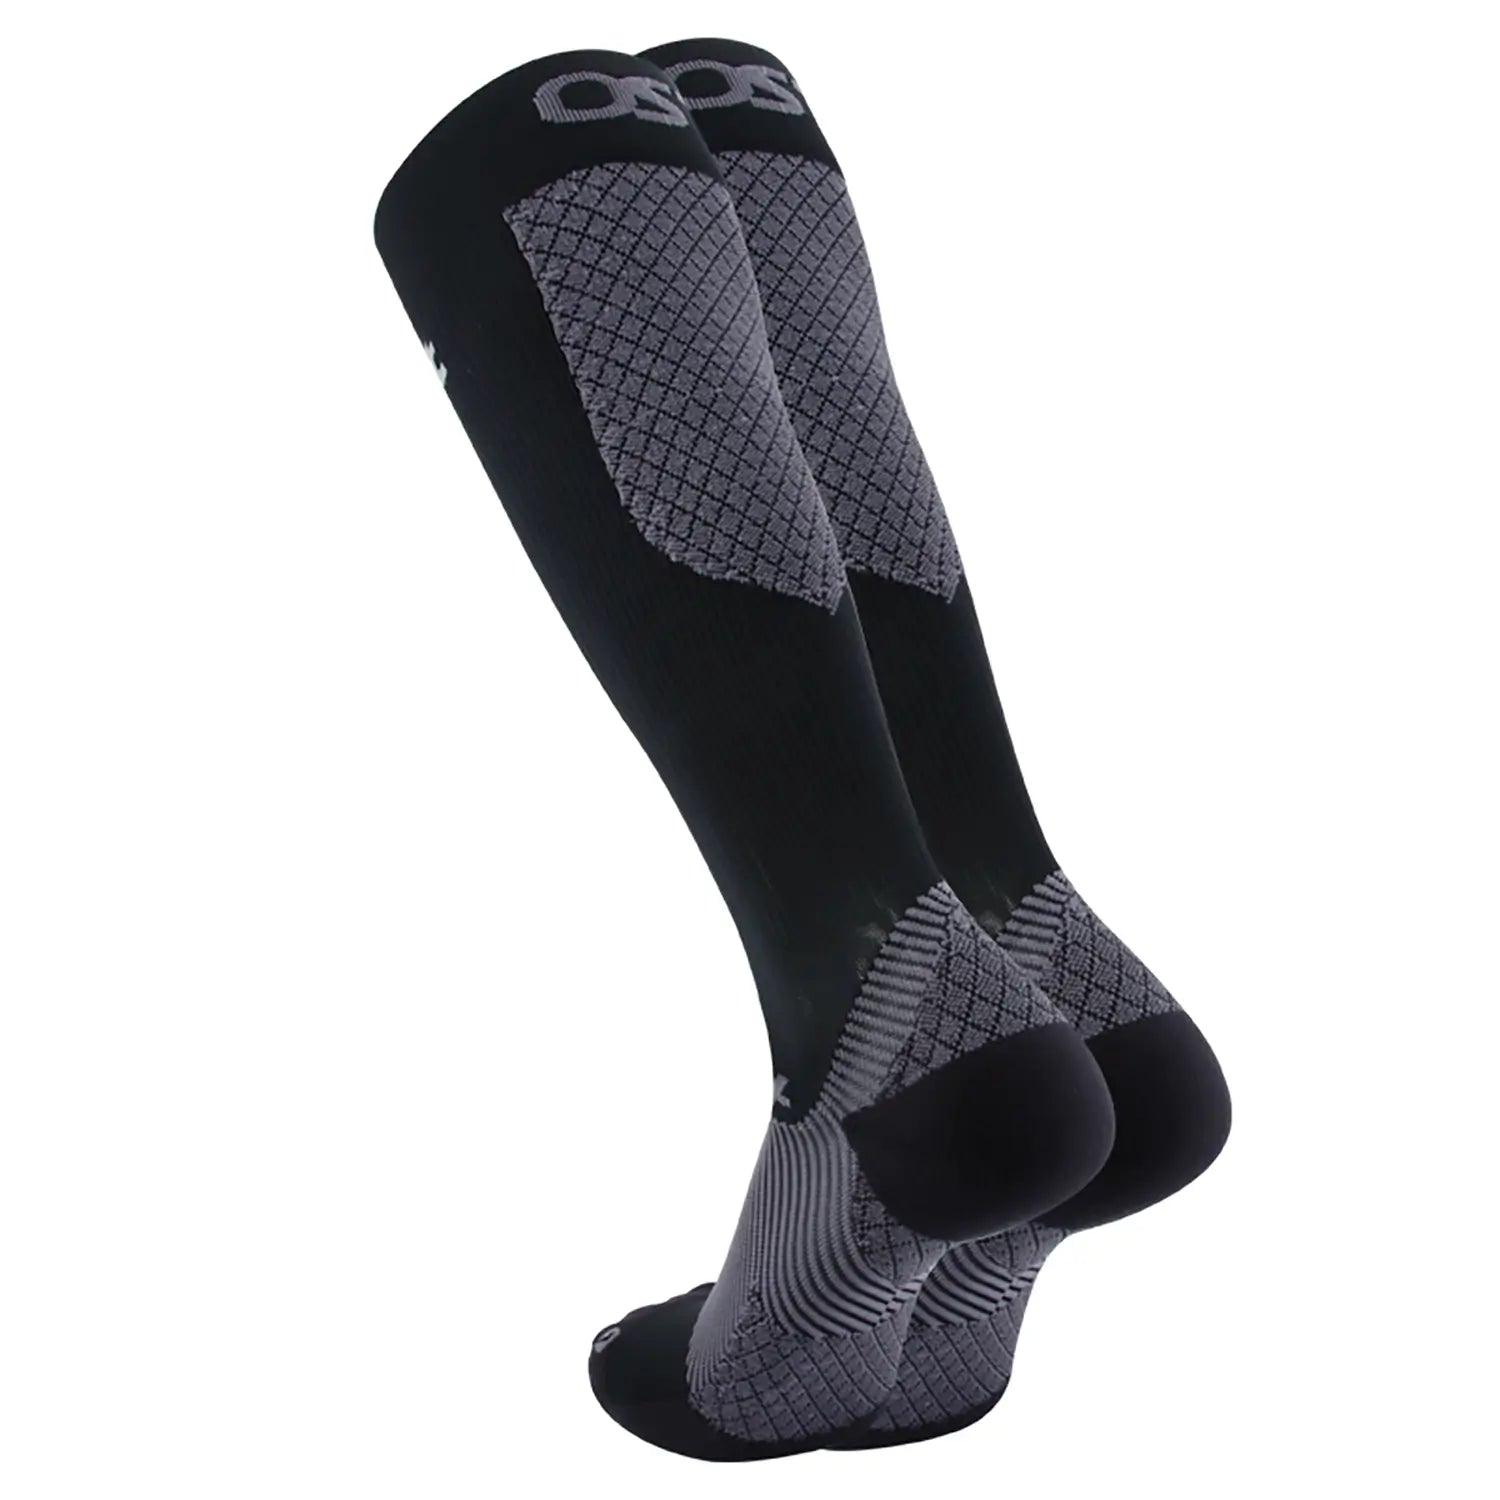 Diabetic socks for men - extra wide Ideal socks for swollen ankles, 100%  cotton